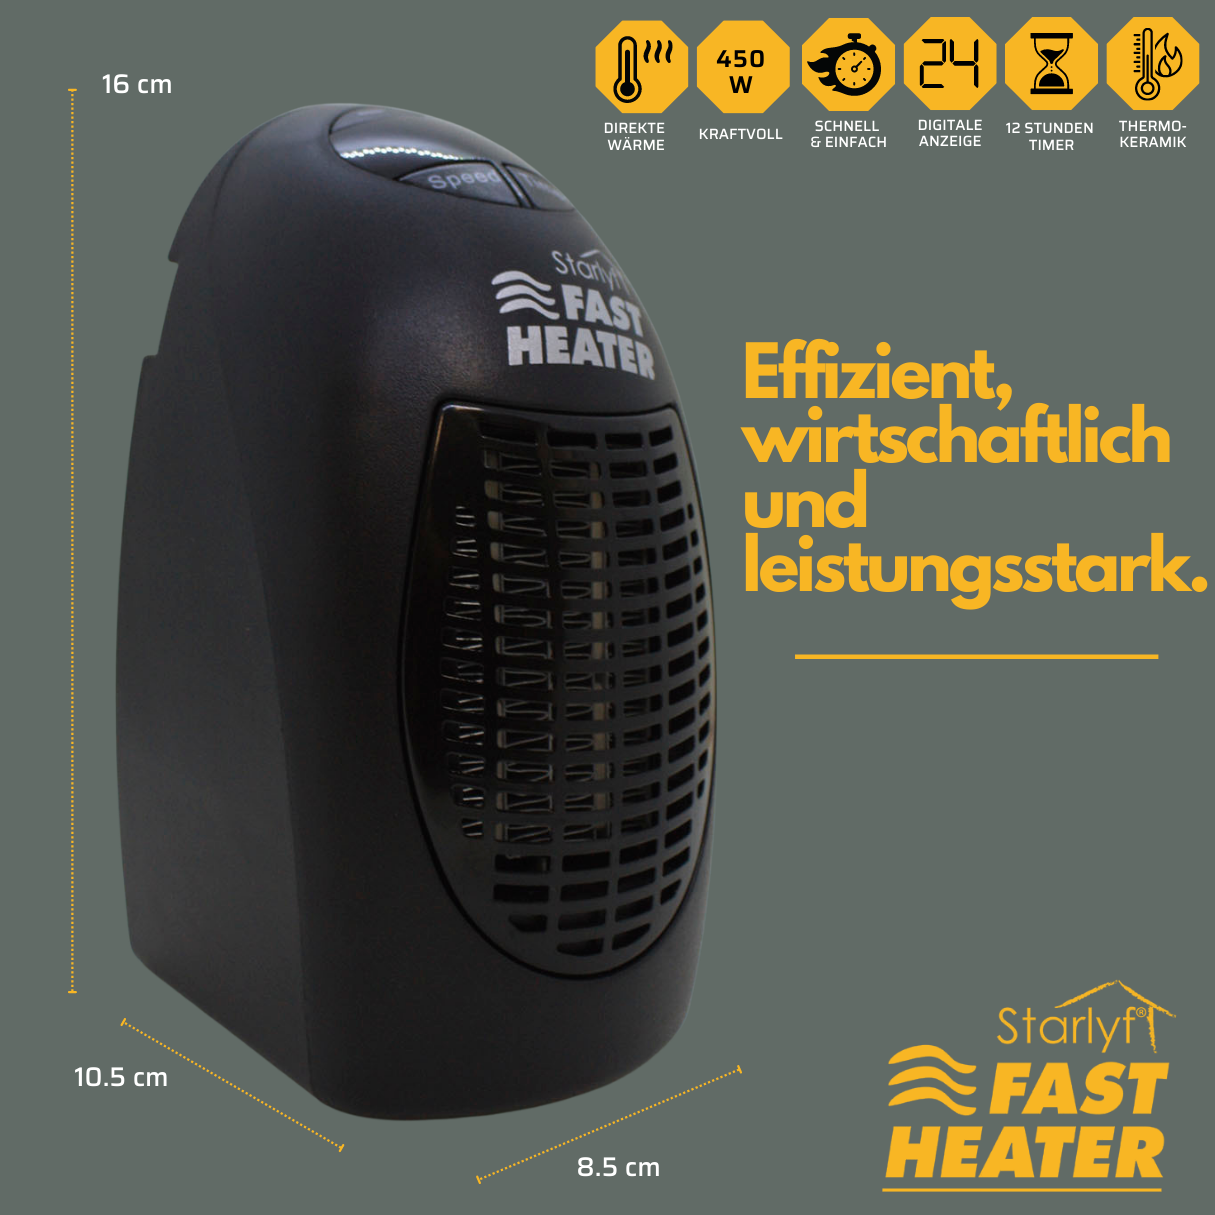 STARLYF Fast Heater Schwarz Heizlüfter Raumgröße: m²) Watt, 15 (400